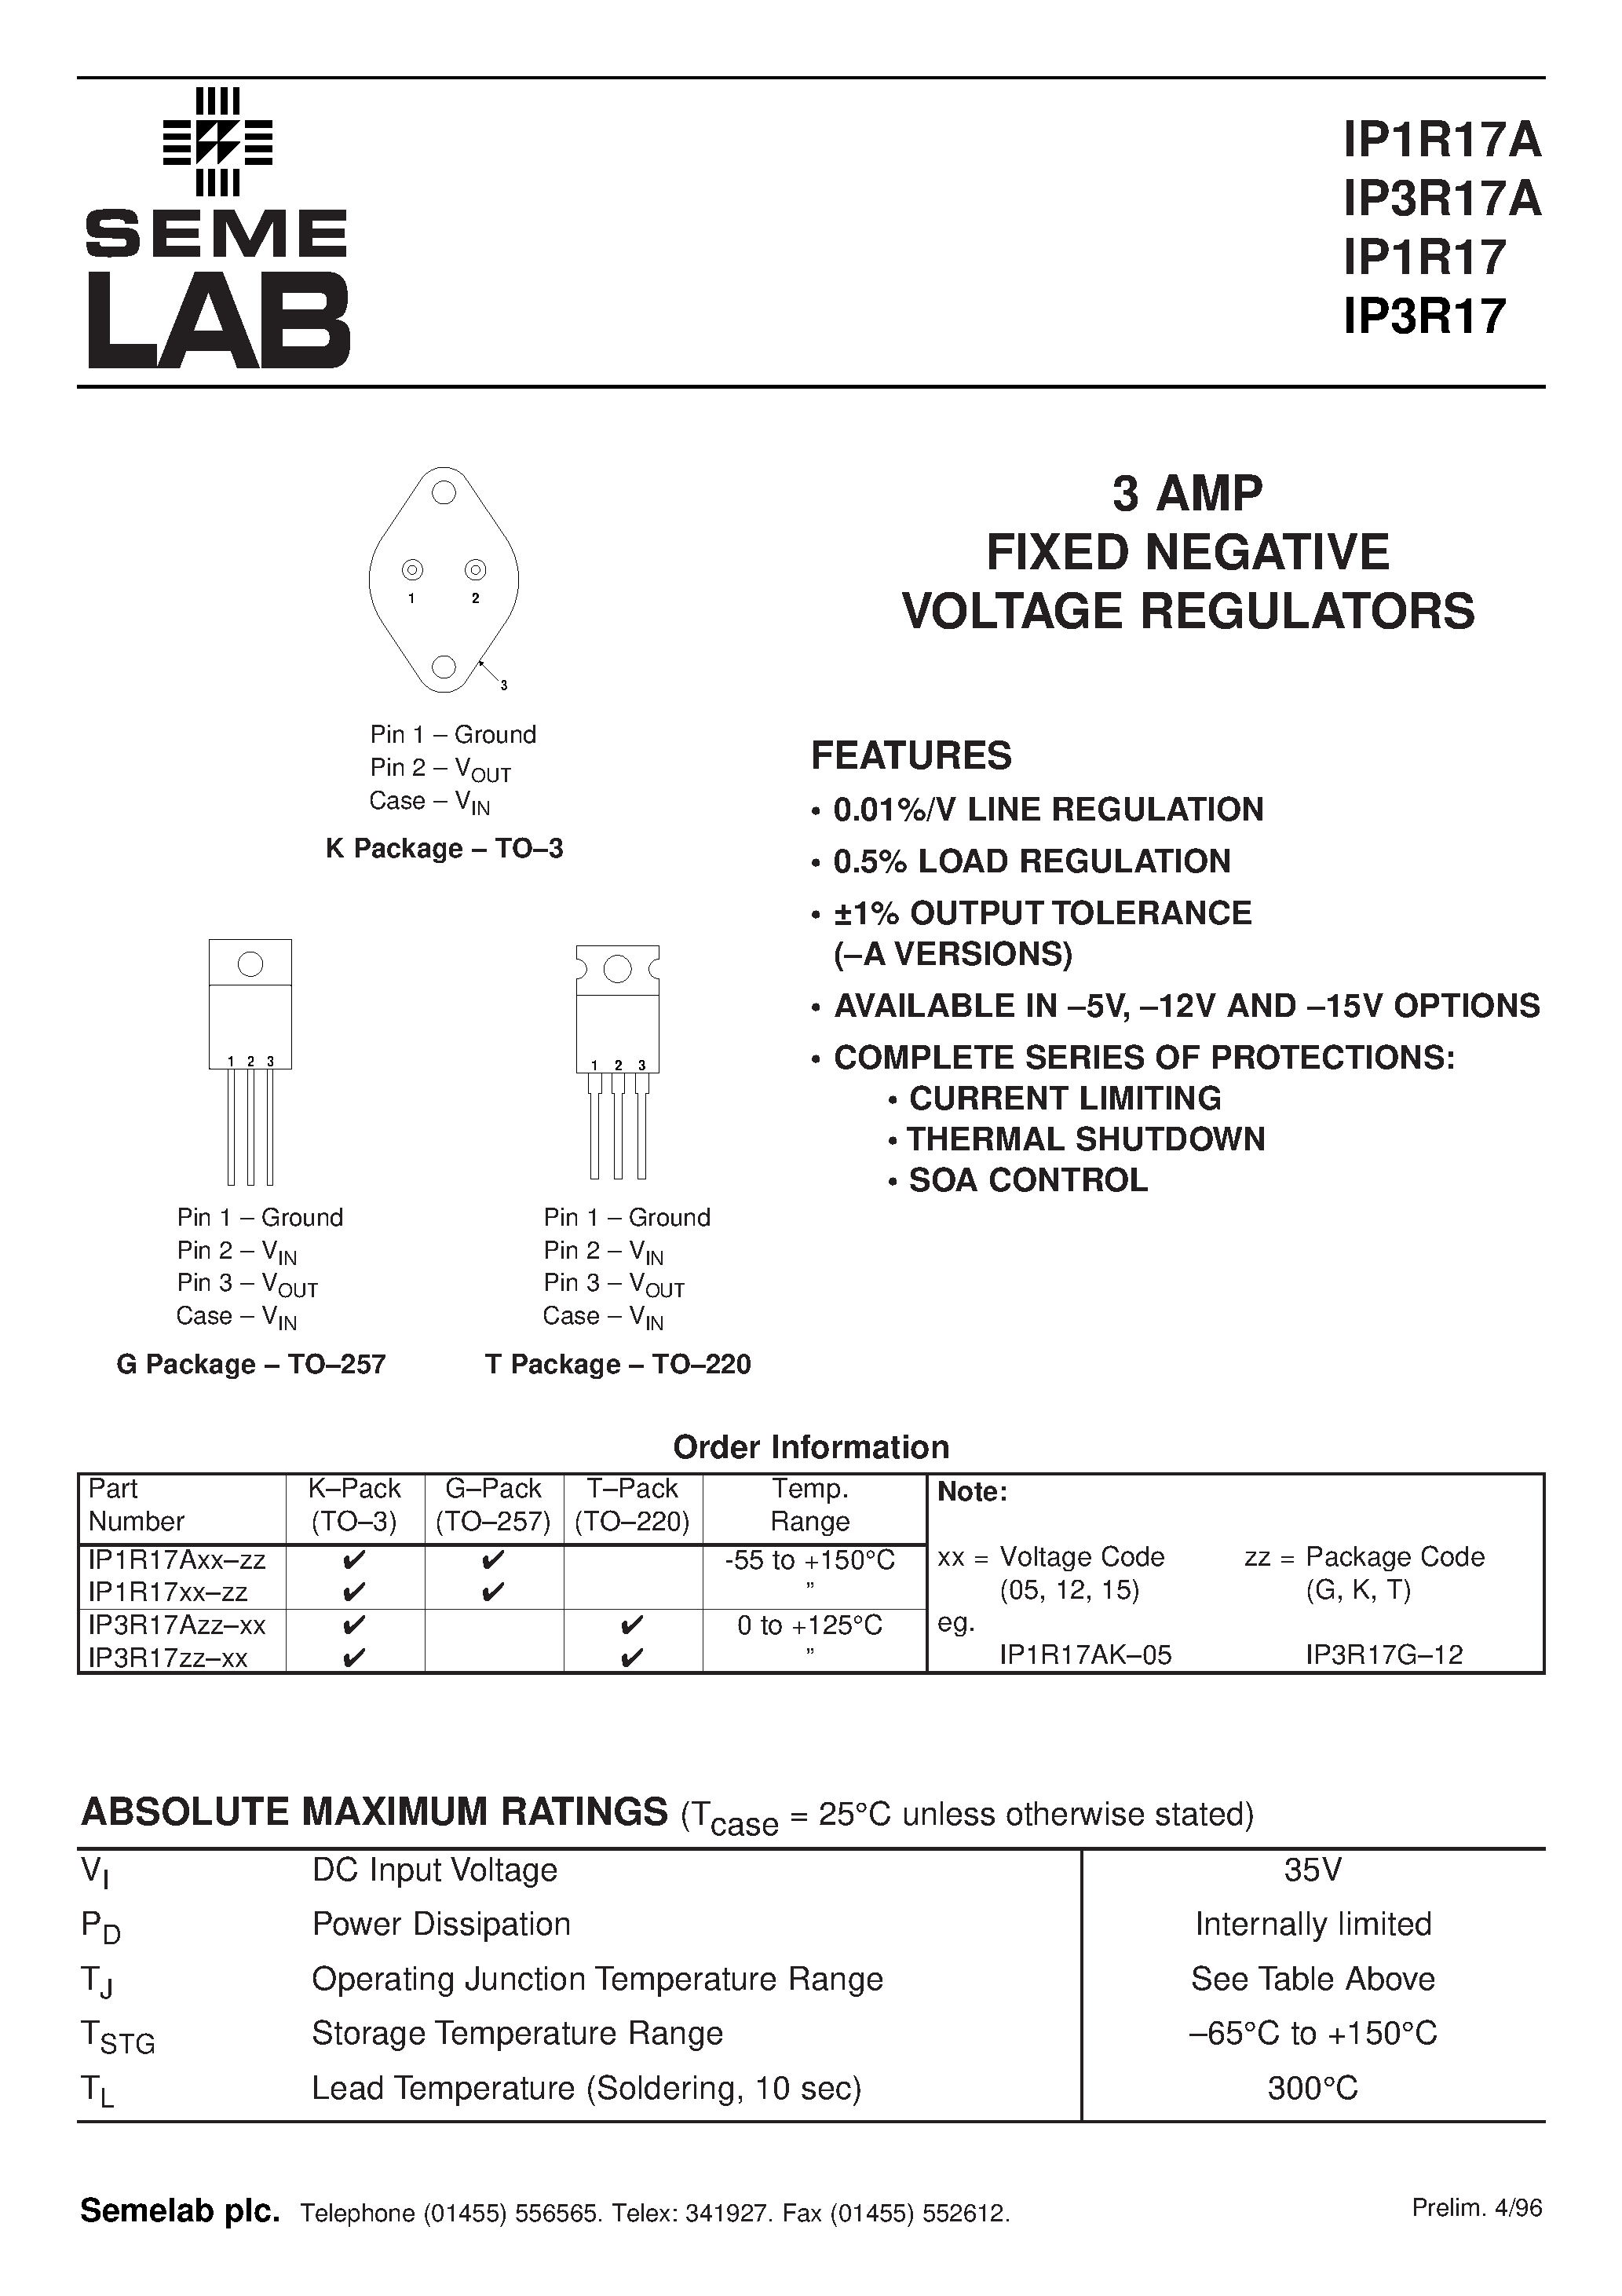 Datasheet IP1R17A15-K - 3 AMP FIXED NEGATIVE VOLTAGE REGULATORS page 1